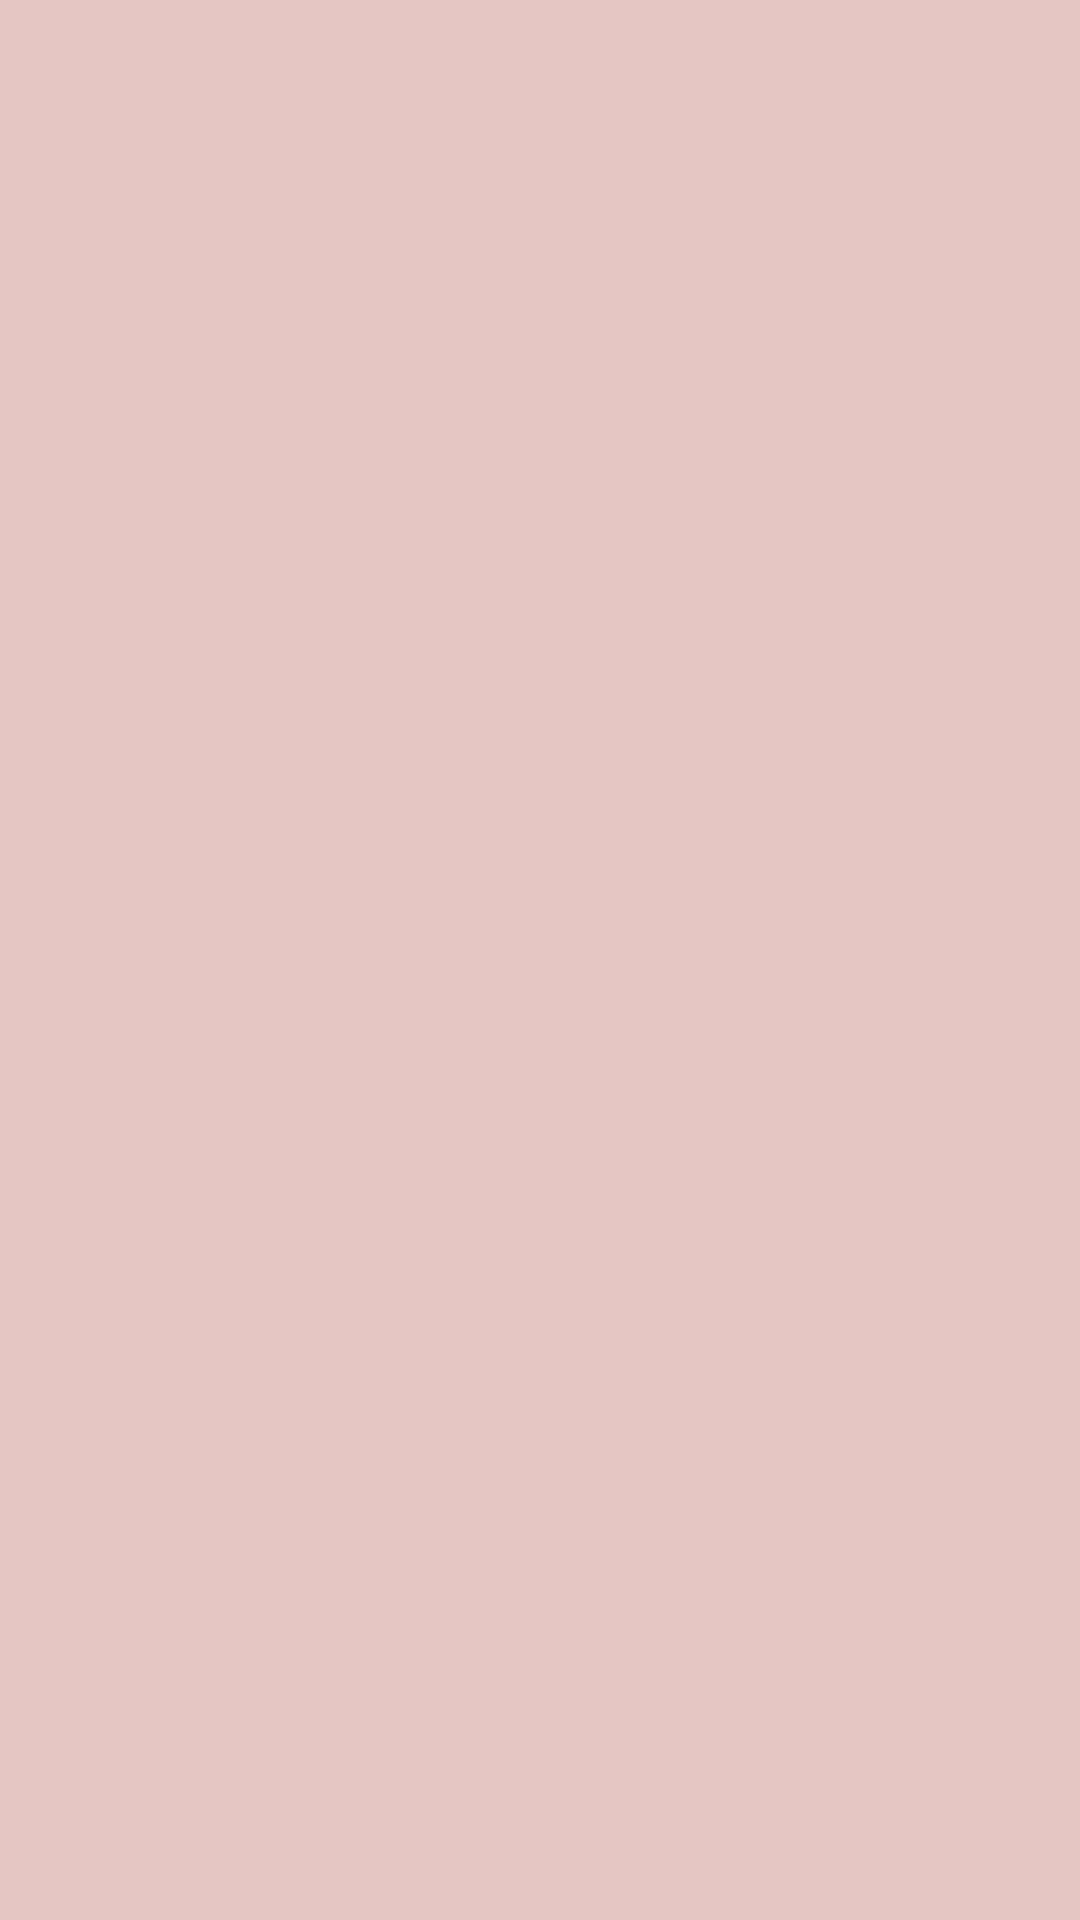 Powder Pink Solid Color Phone Wallpaper